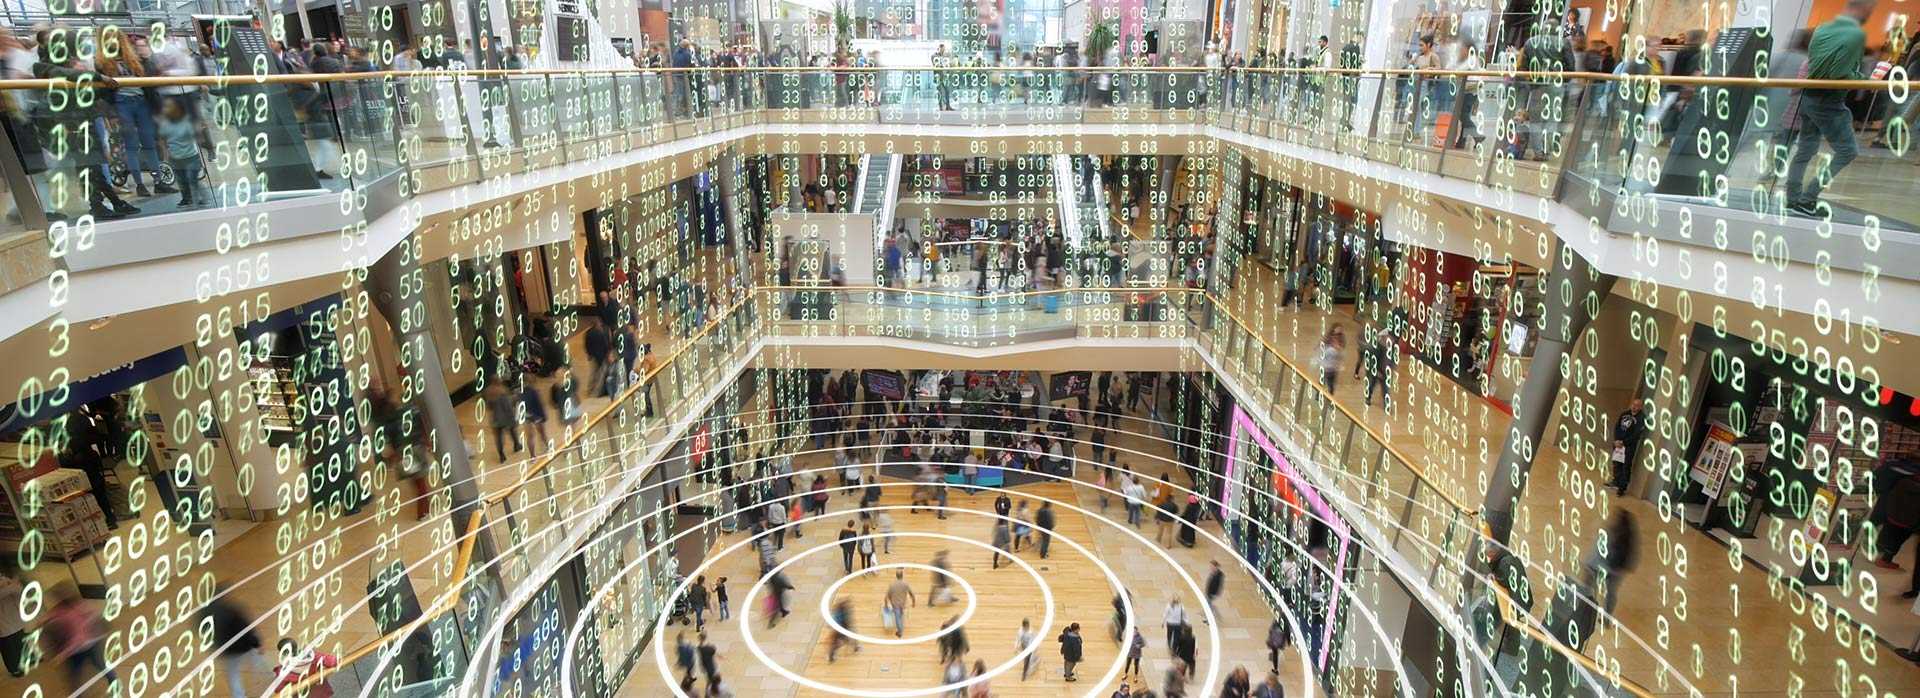 shopping mall digital